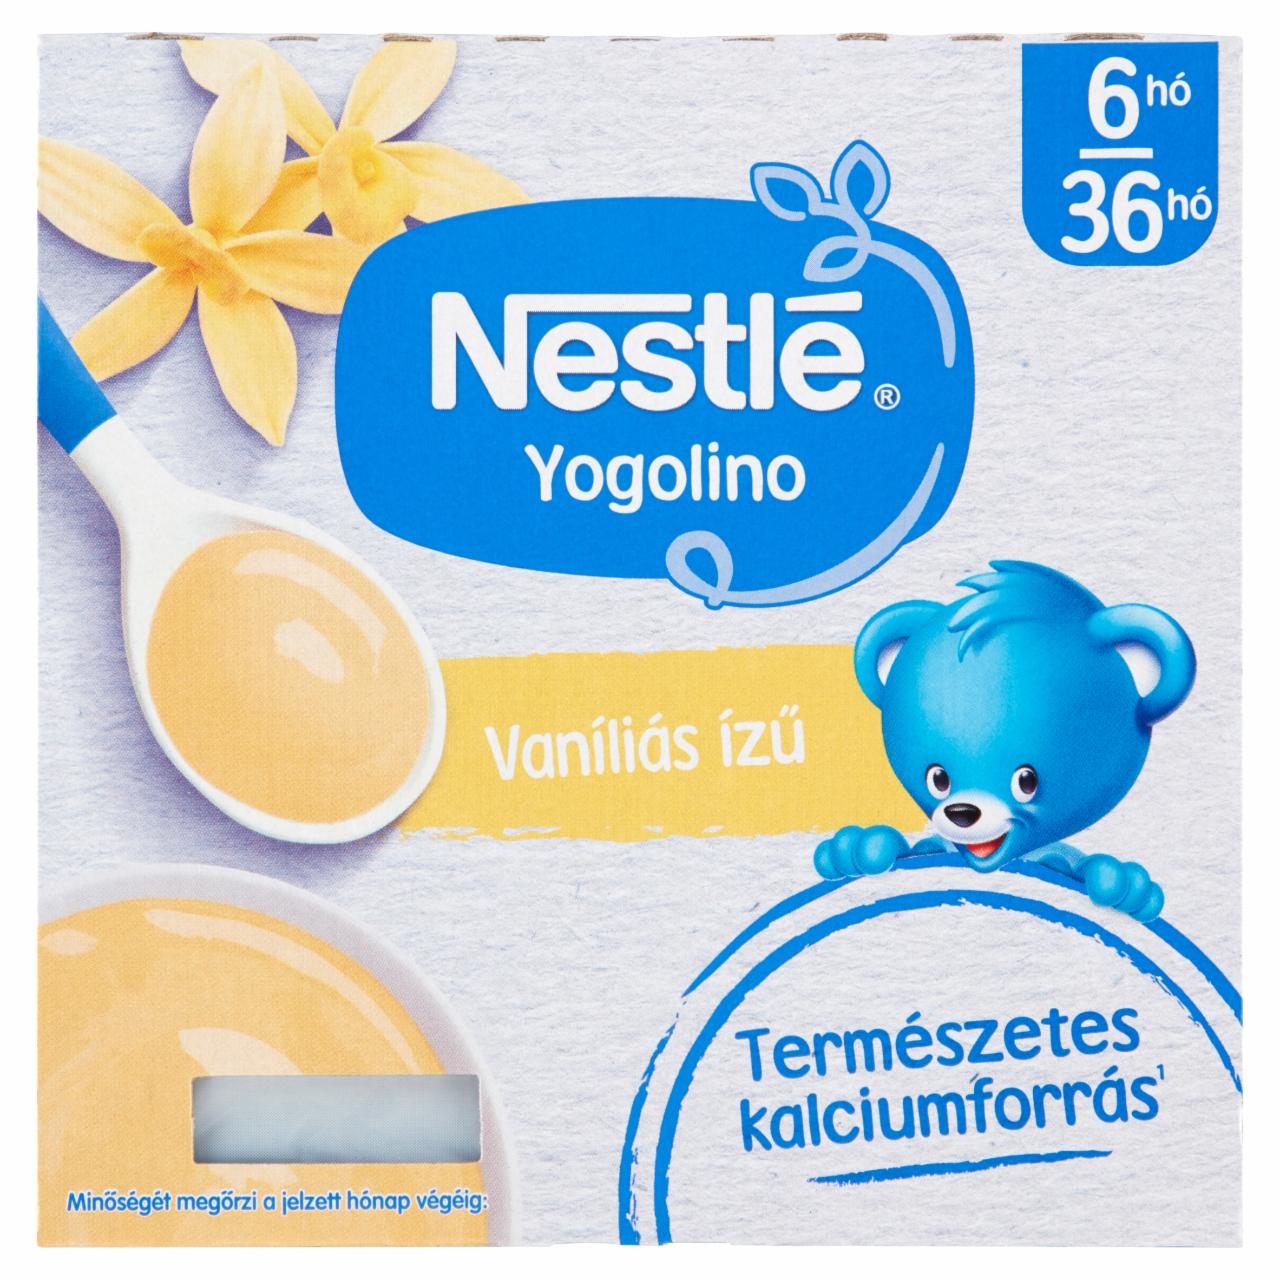 Képek - Nestlé Yogolino vaníliás ízű babapuding 6 hónapos kortól 36 hónapos korig 4 x 100 g (400 g)